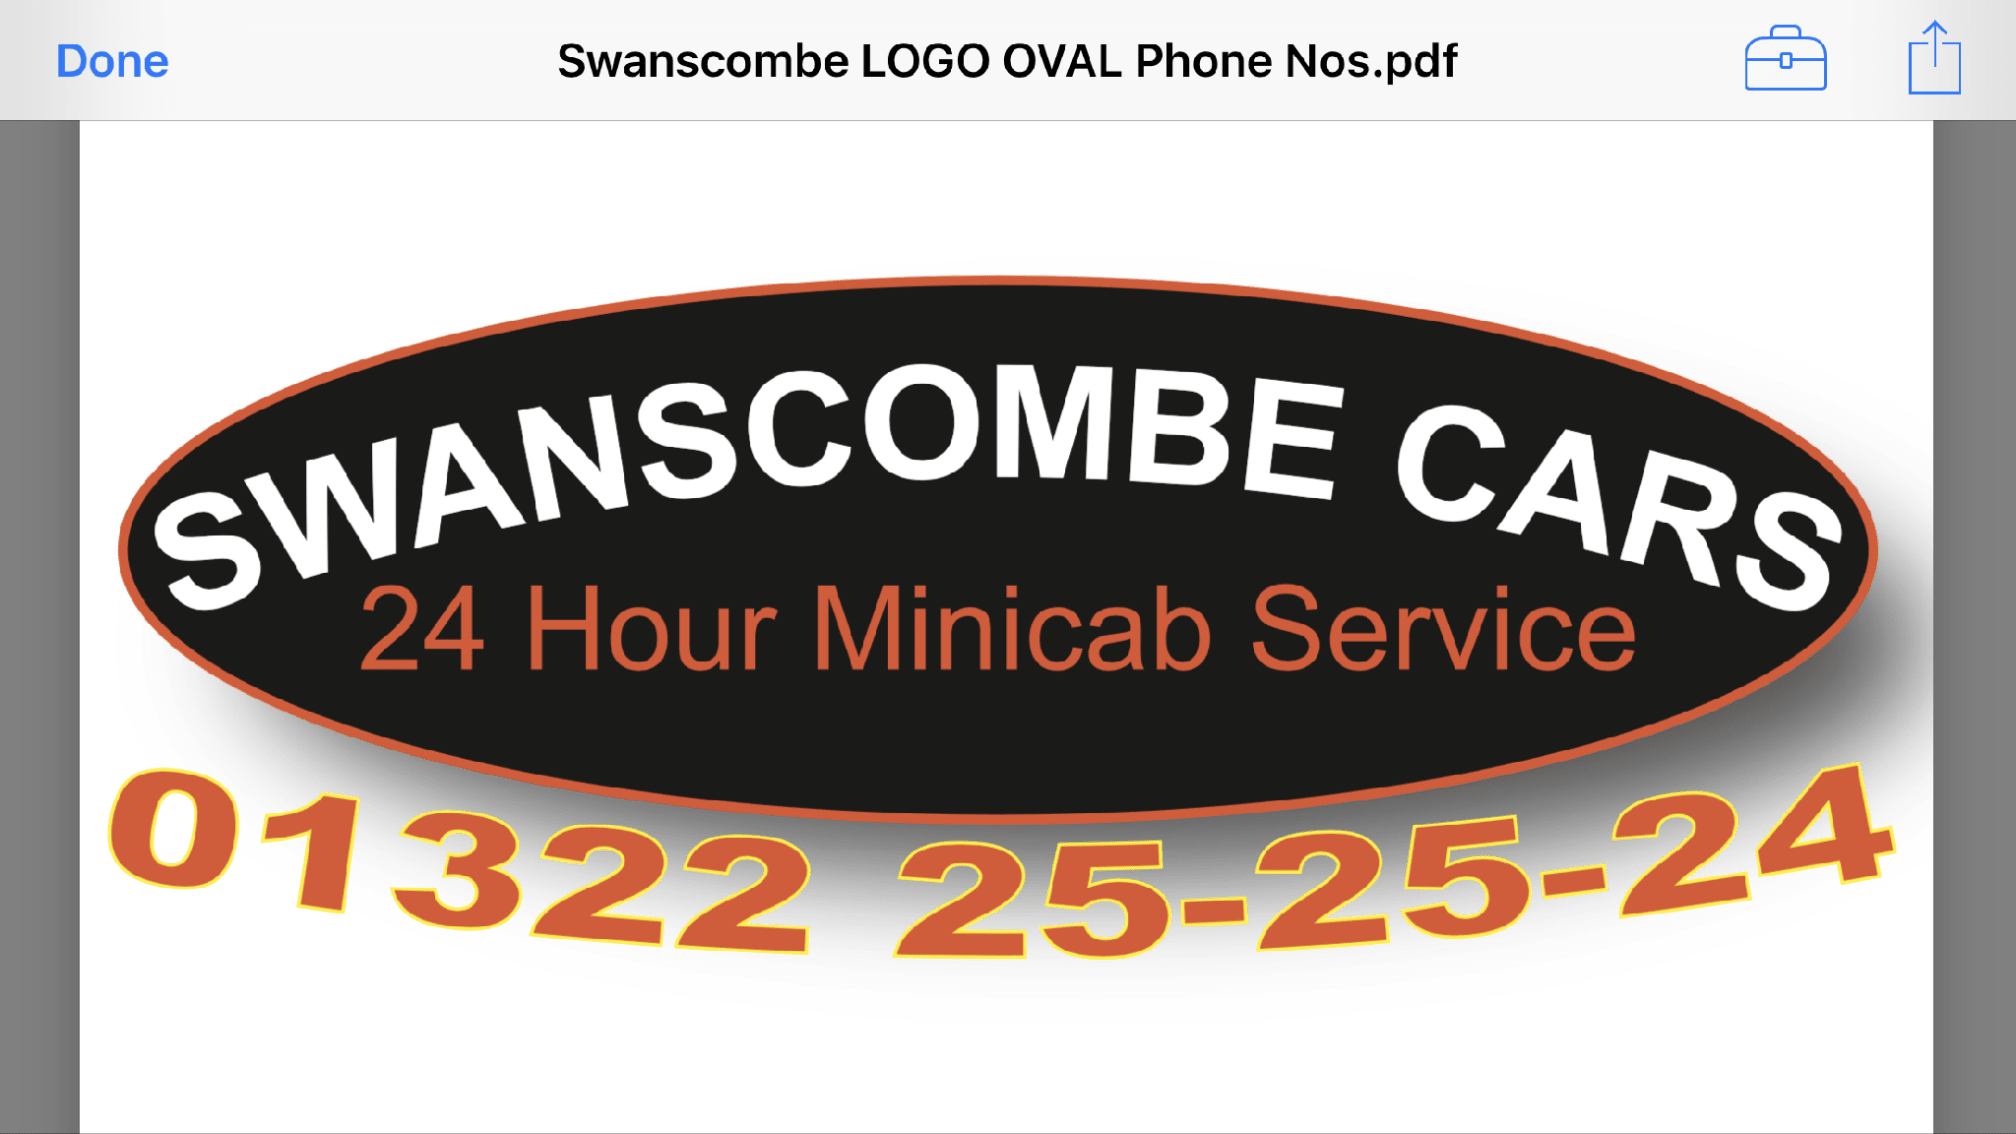 Swanscombe Cars Dartford 01474 776655